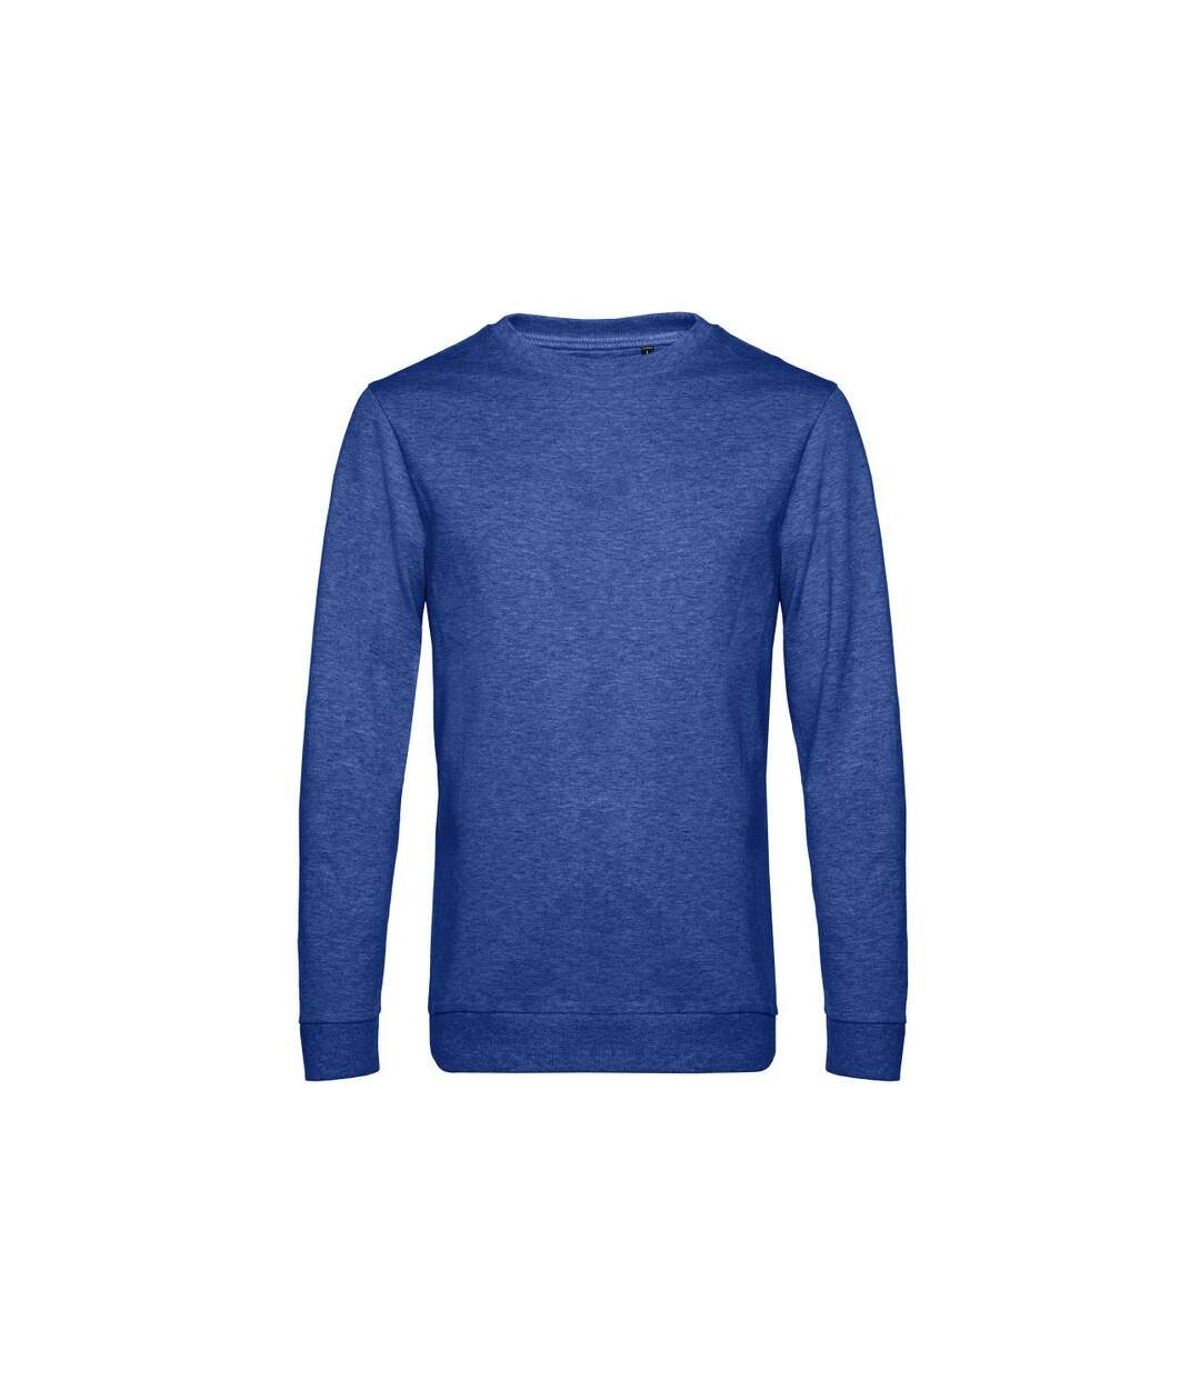 B&C Mens Set In Sweatshirt (Heather Royal Blue) - UTBC4680